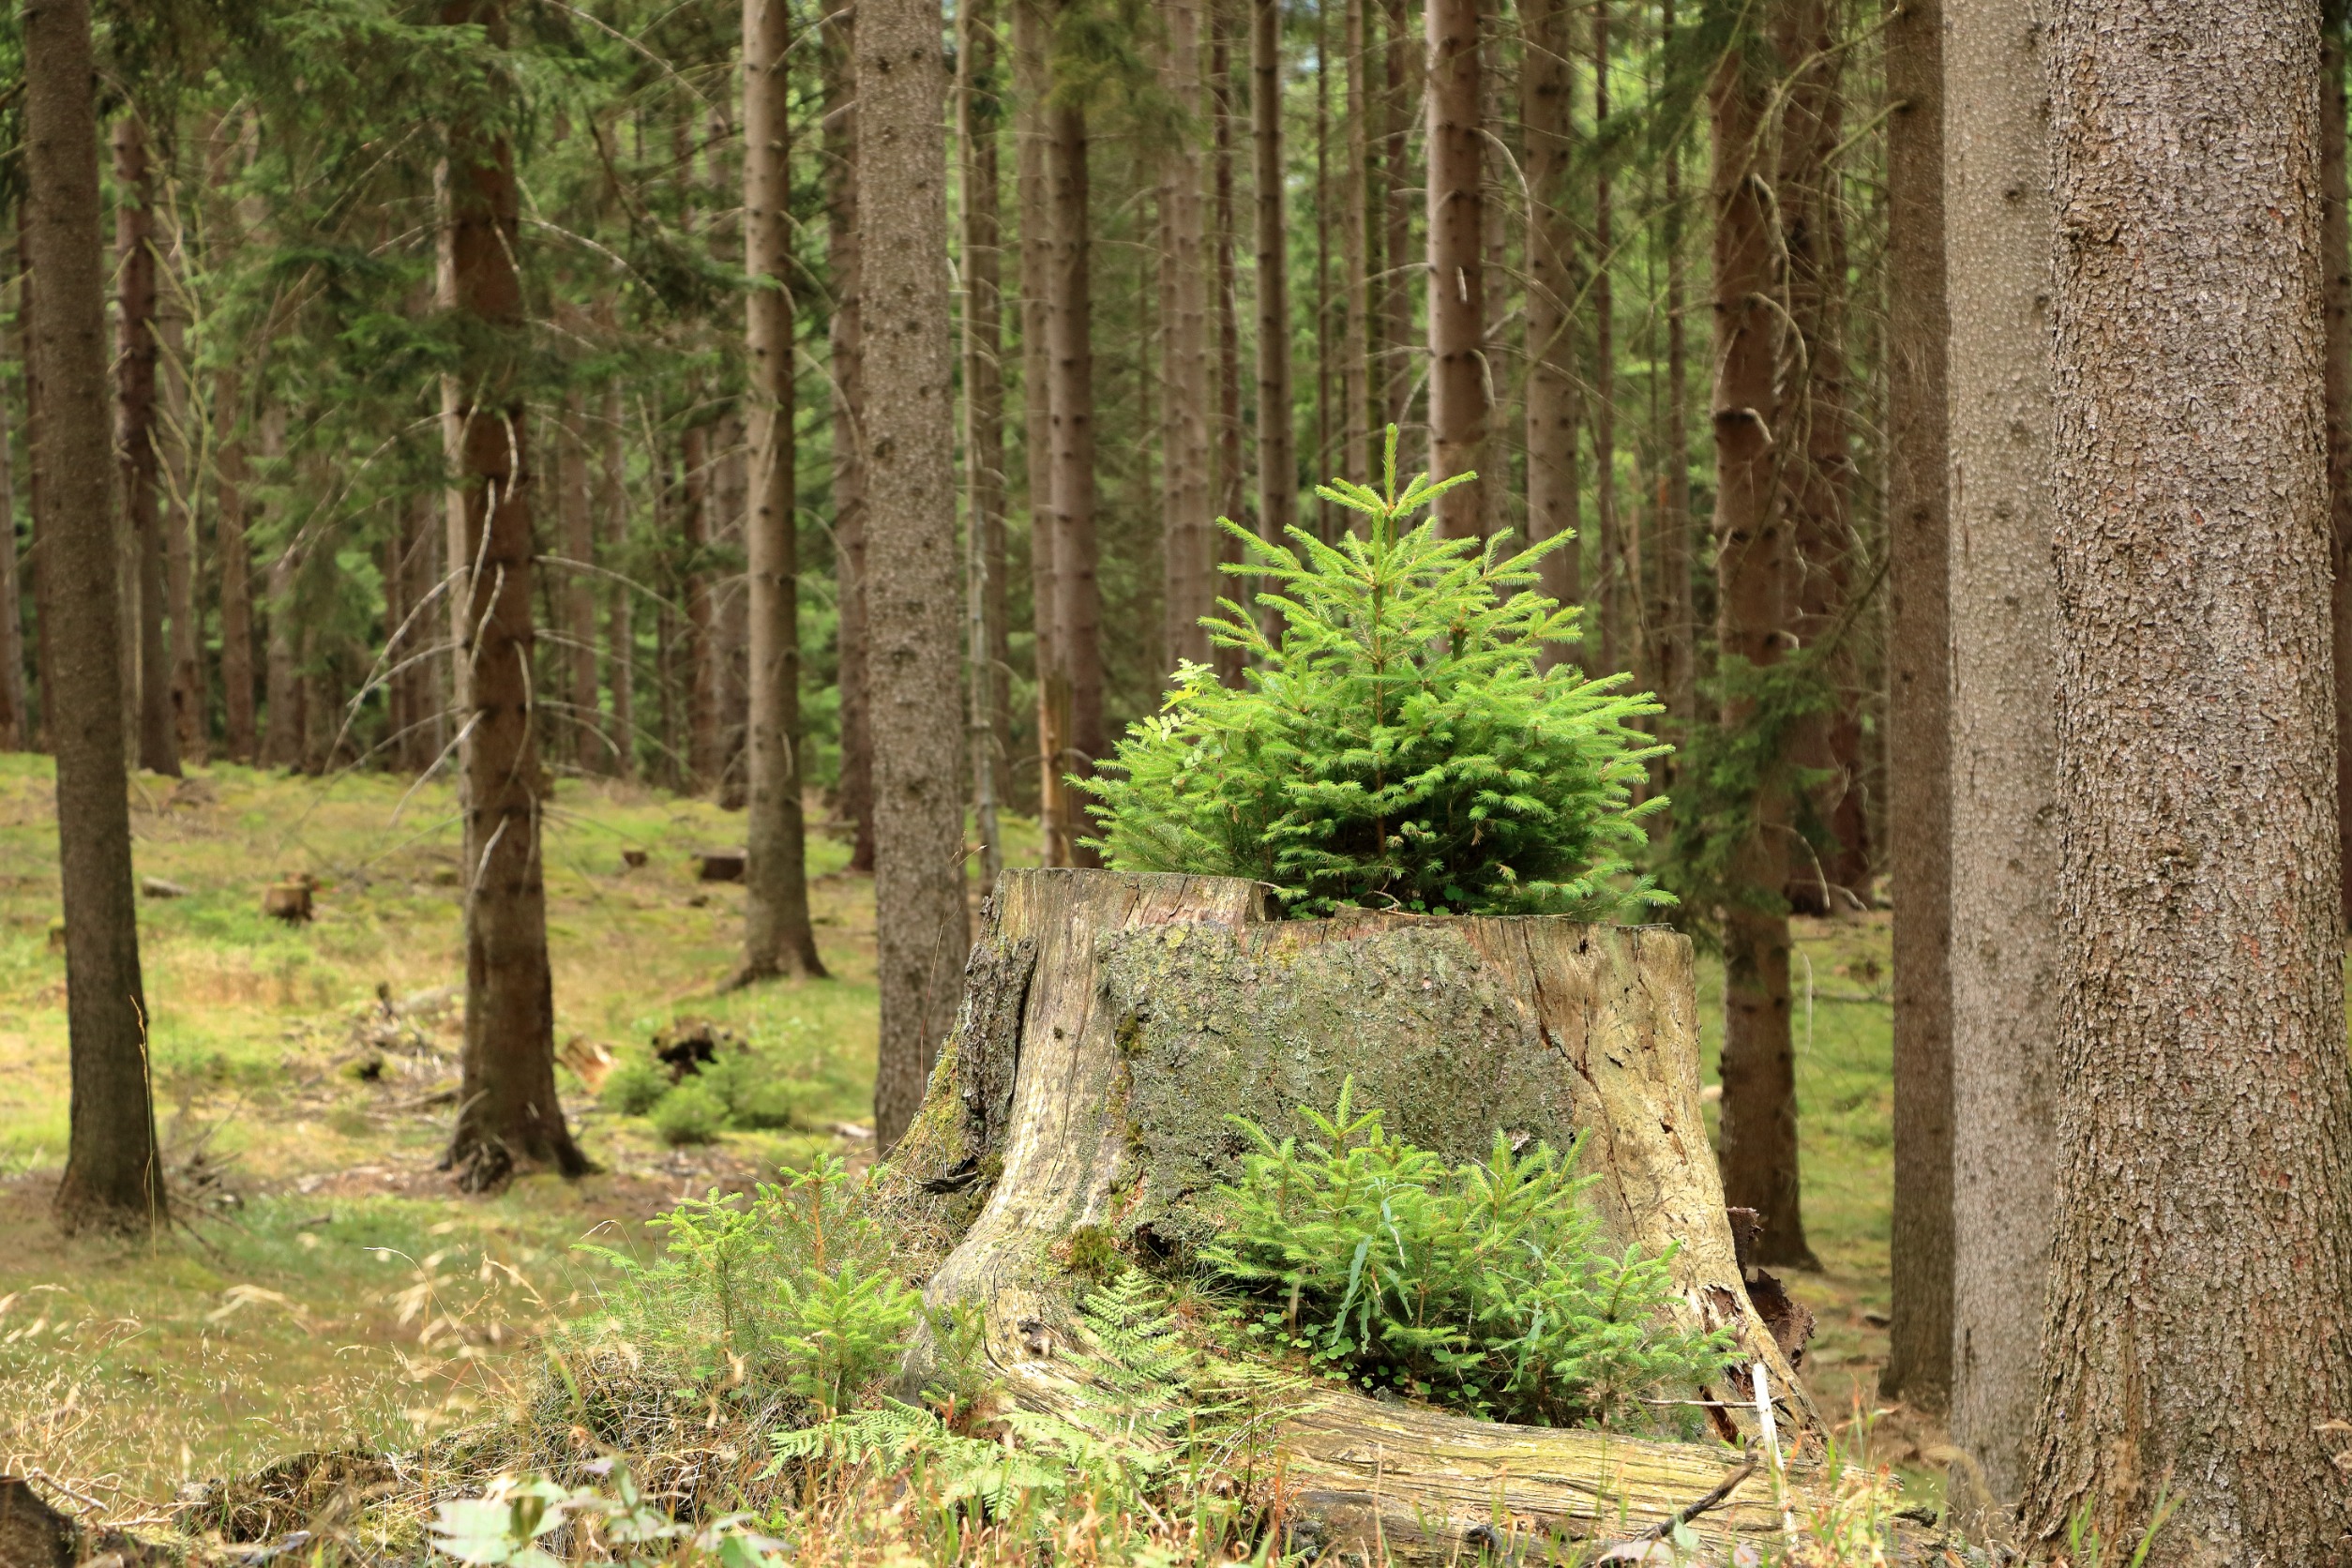 pine plant growing on tree stump